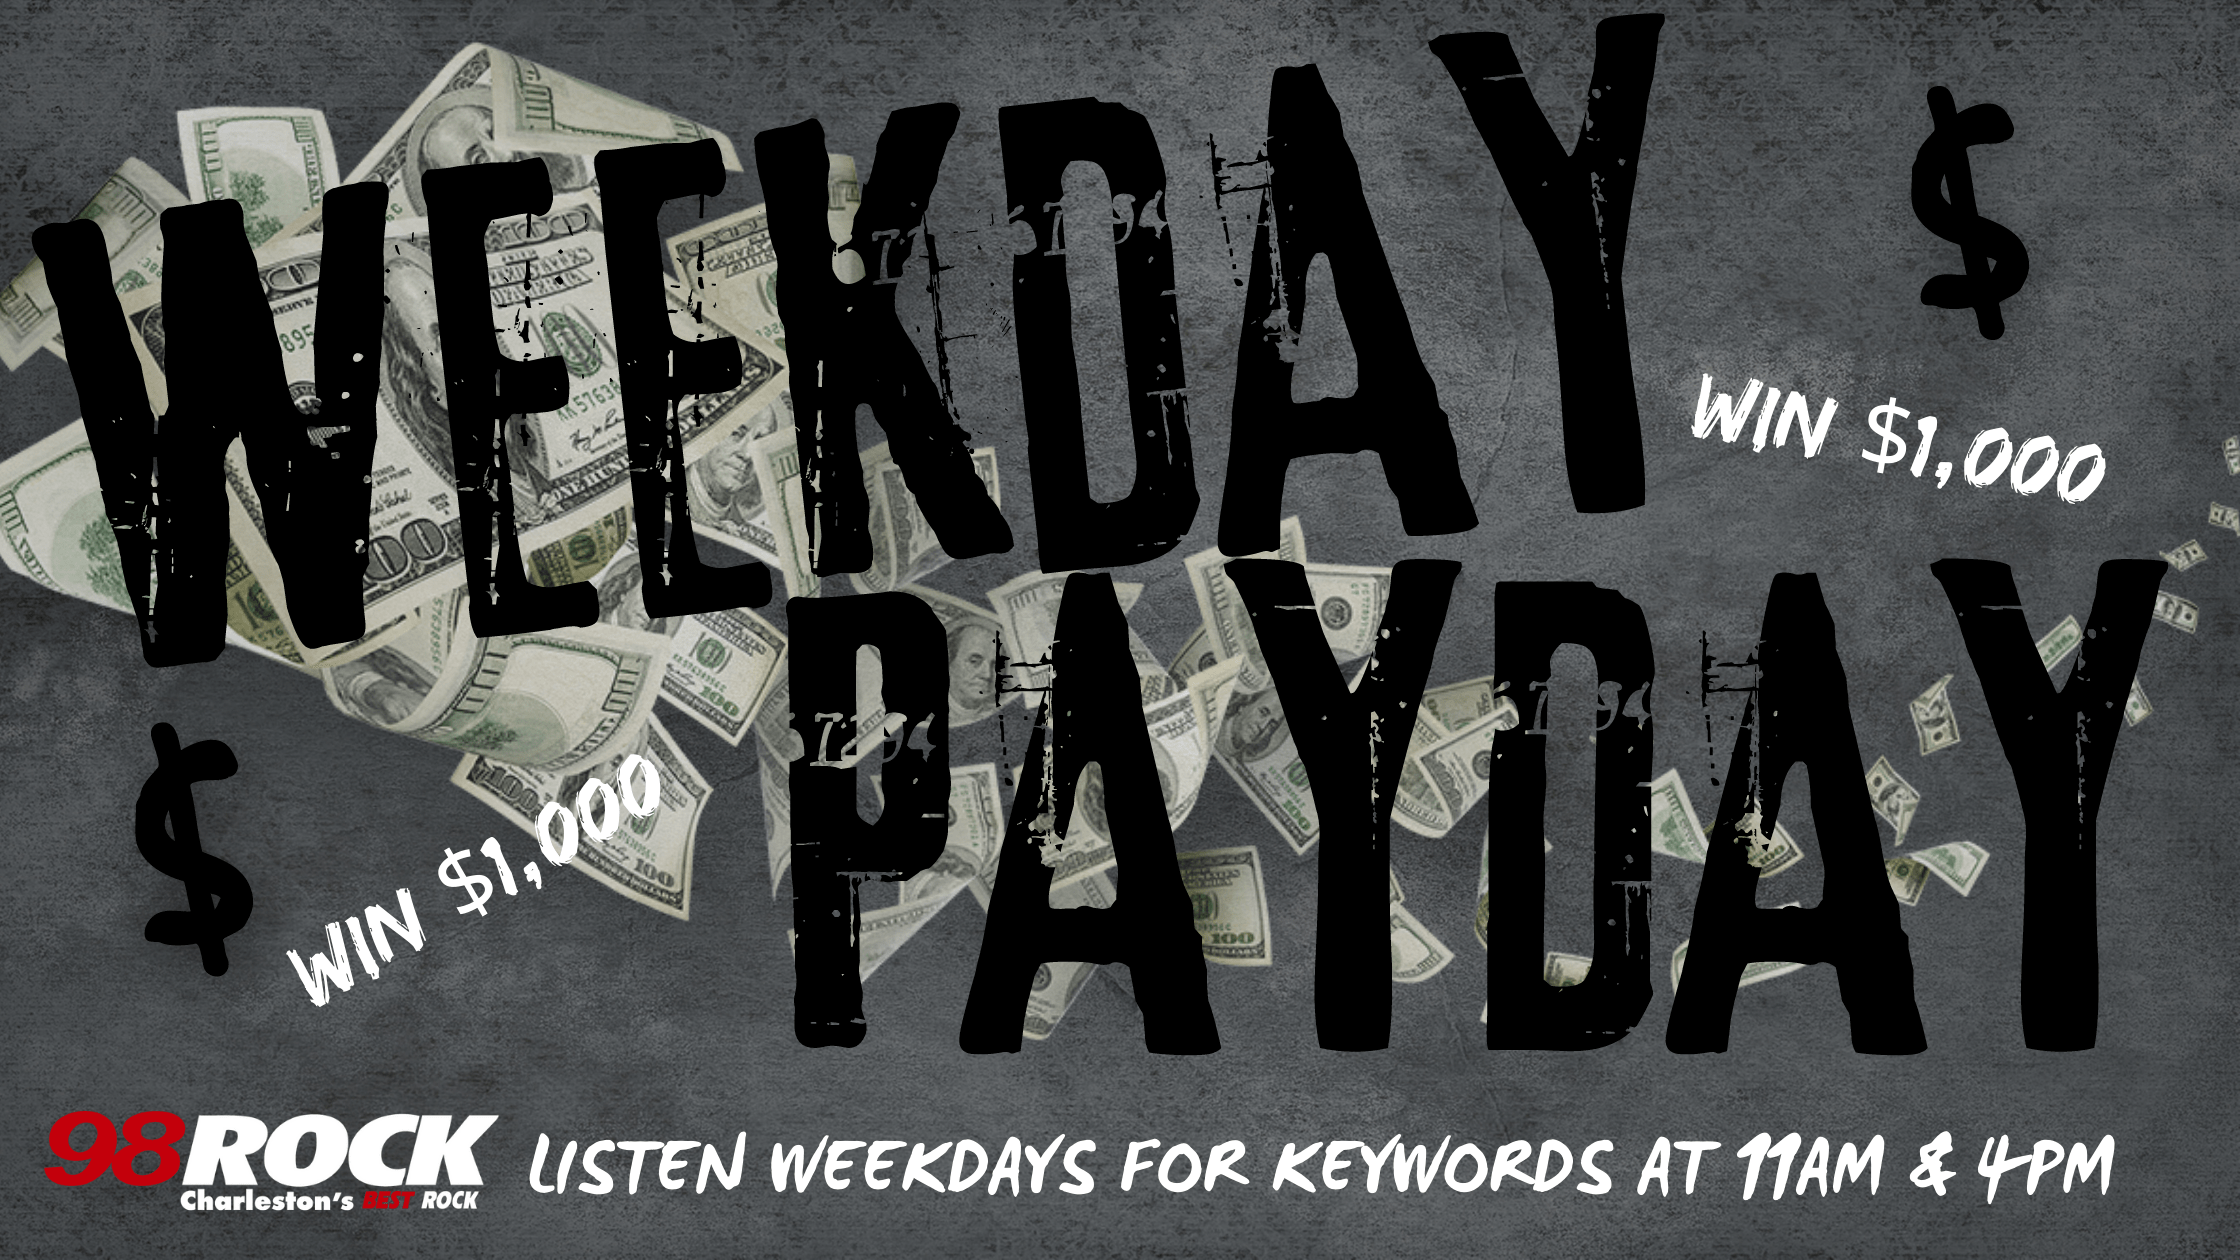 weekday-payday-wybb-hp-slider-janfeb-22